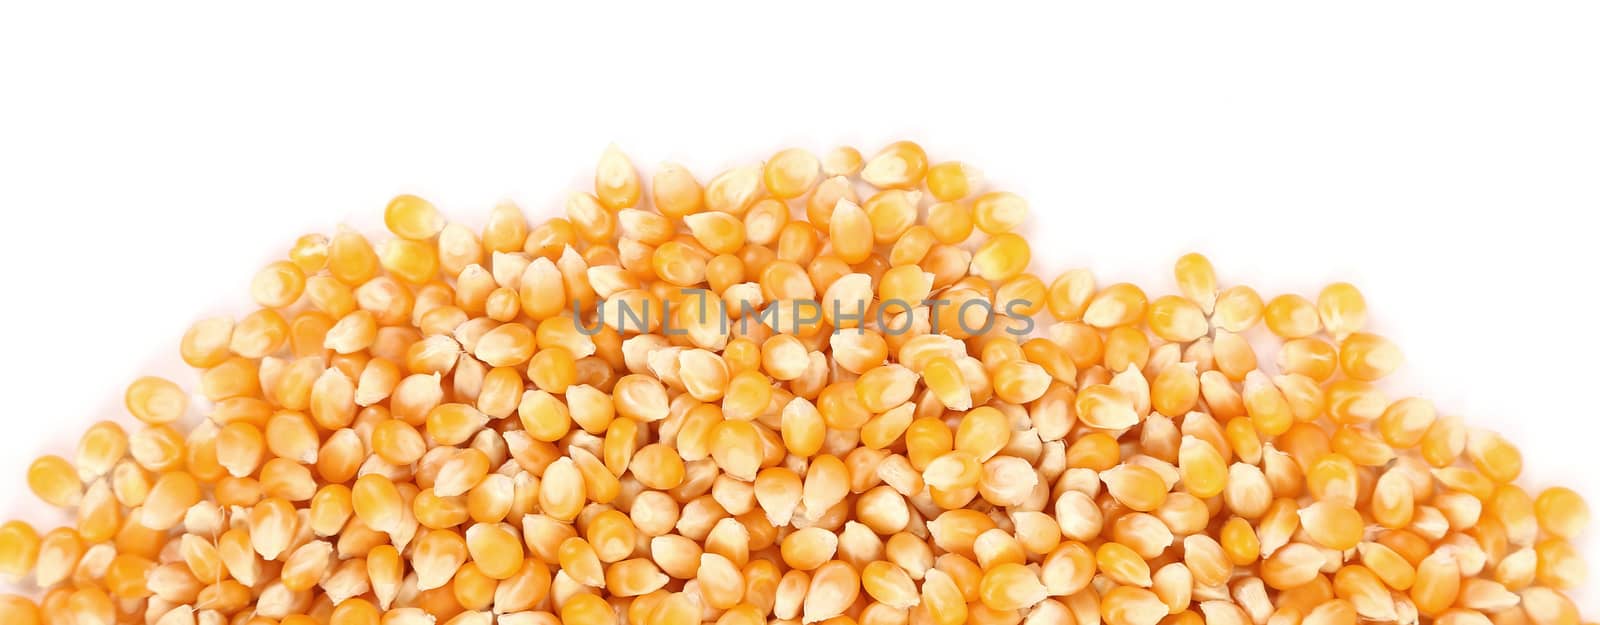 Close up of corn grains. by indigolotos